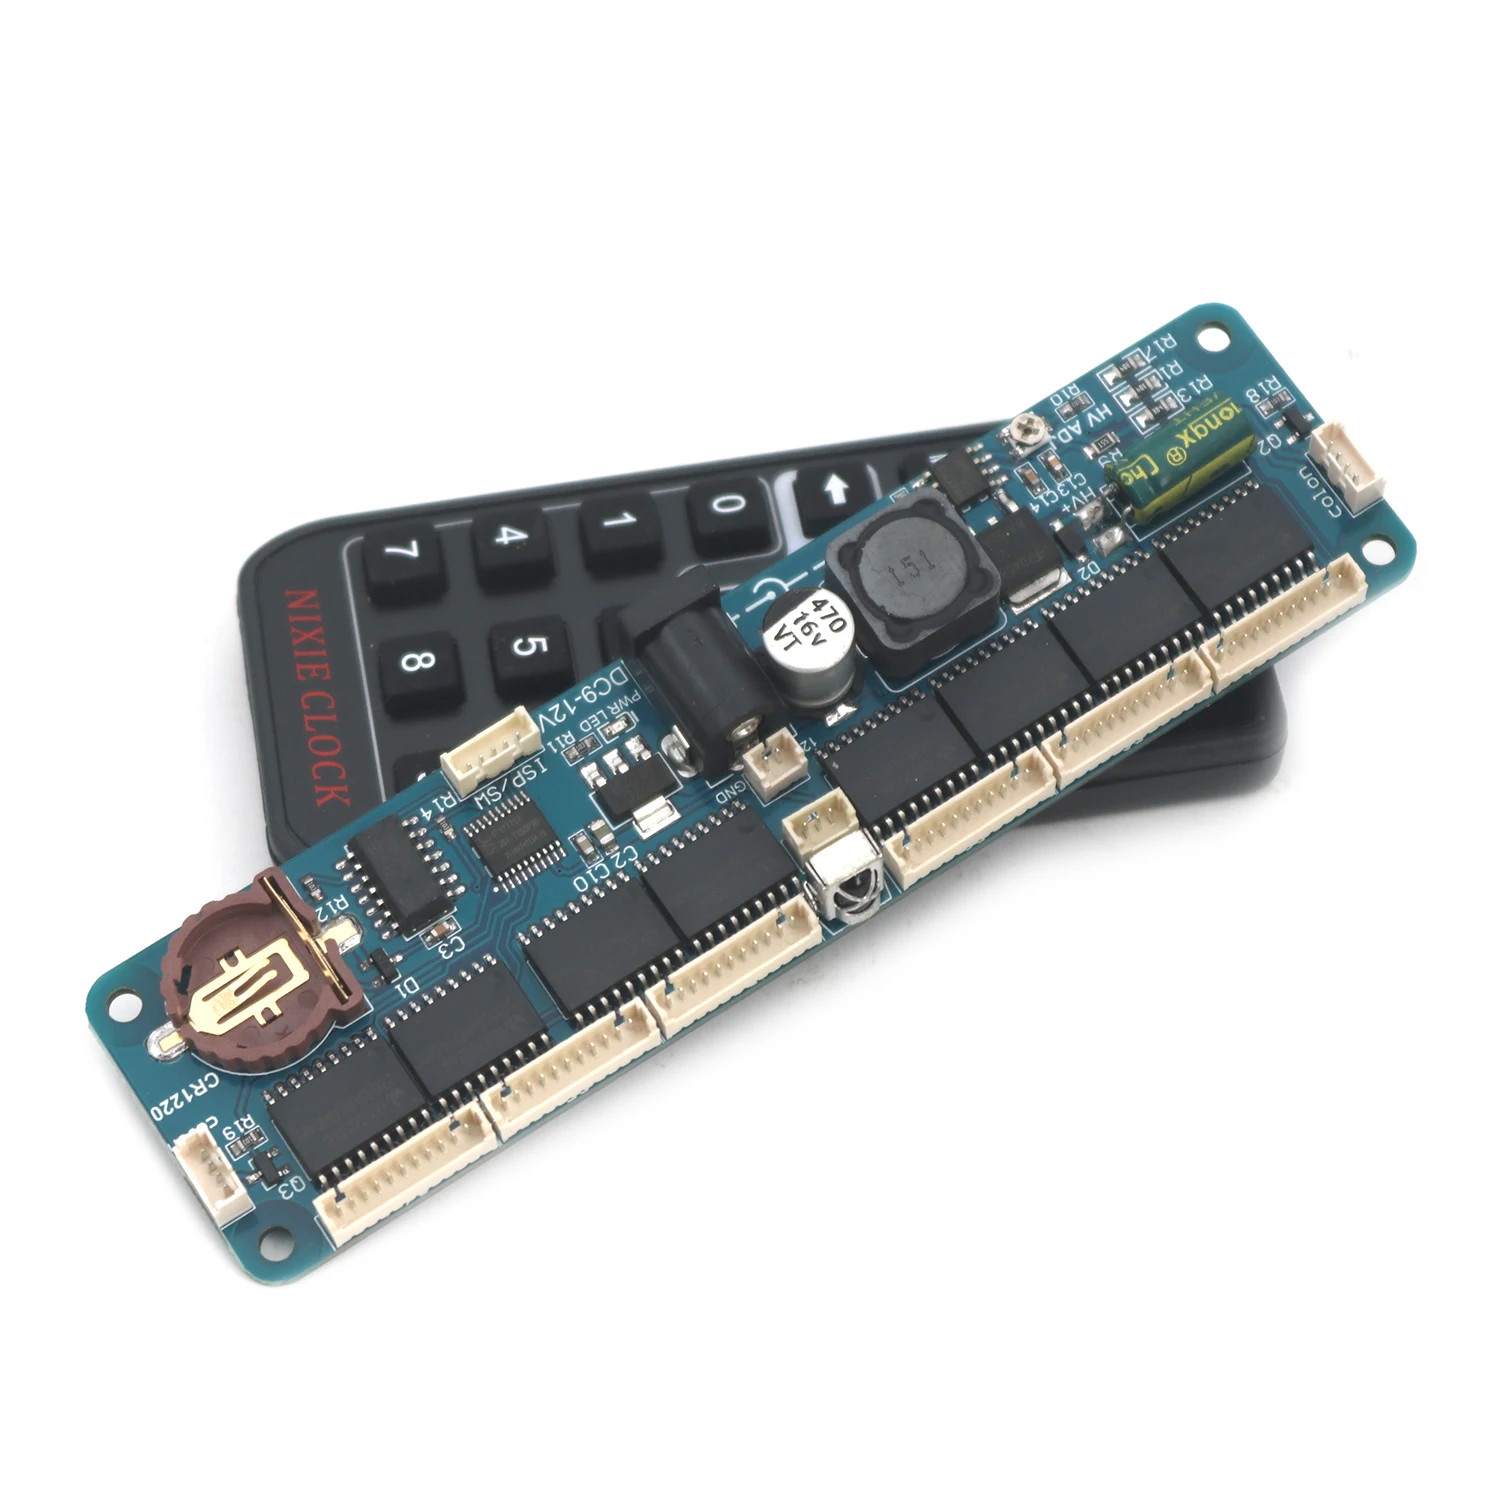 6Bit Digital Nixie Tube Motherboard Controller Board W Remote Control For LED Clock Glow Tube IN12 IN14 IN18 IN8 QS30 Z560M